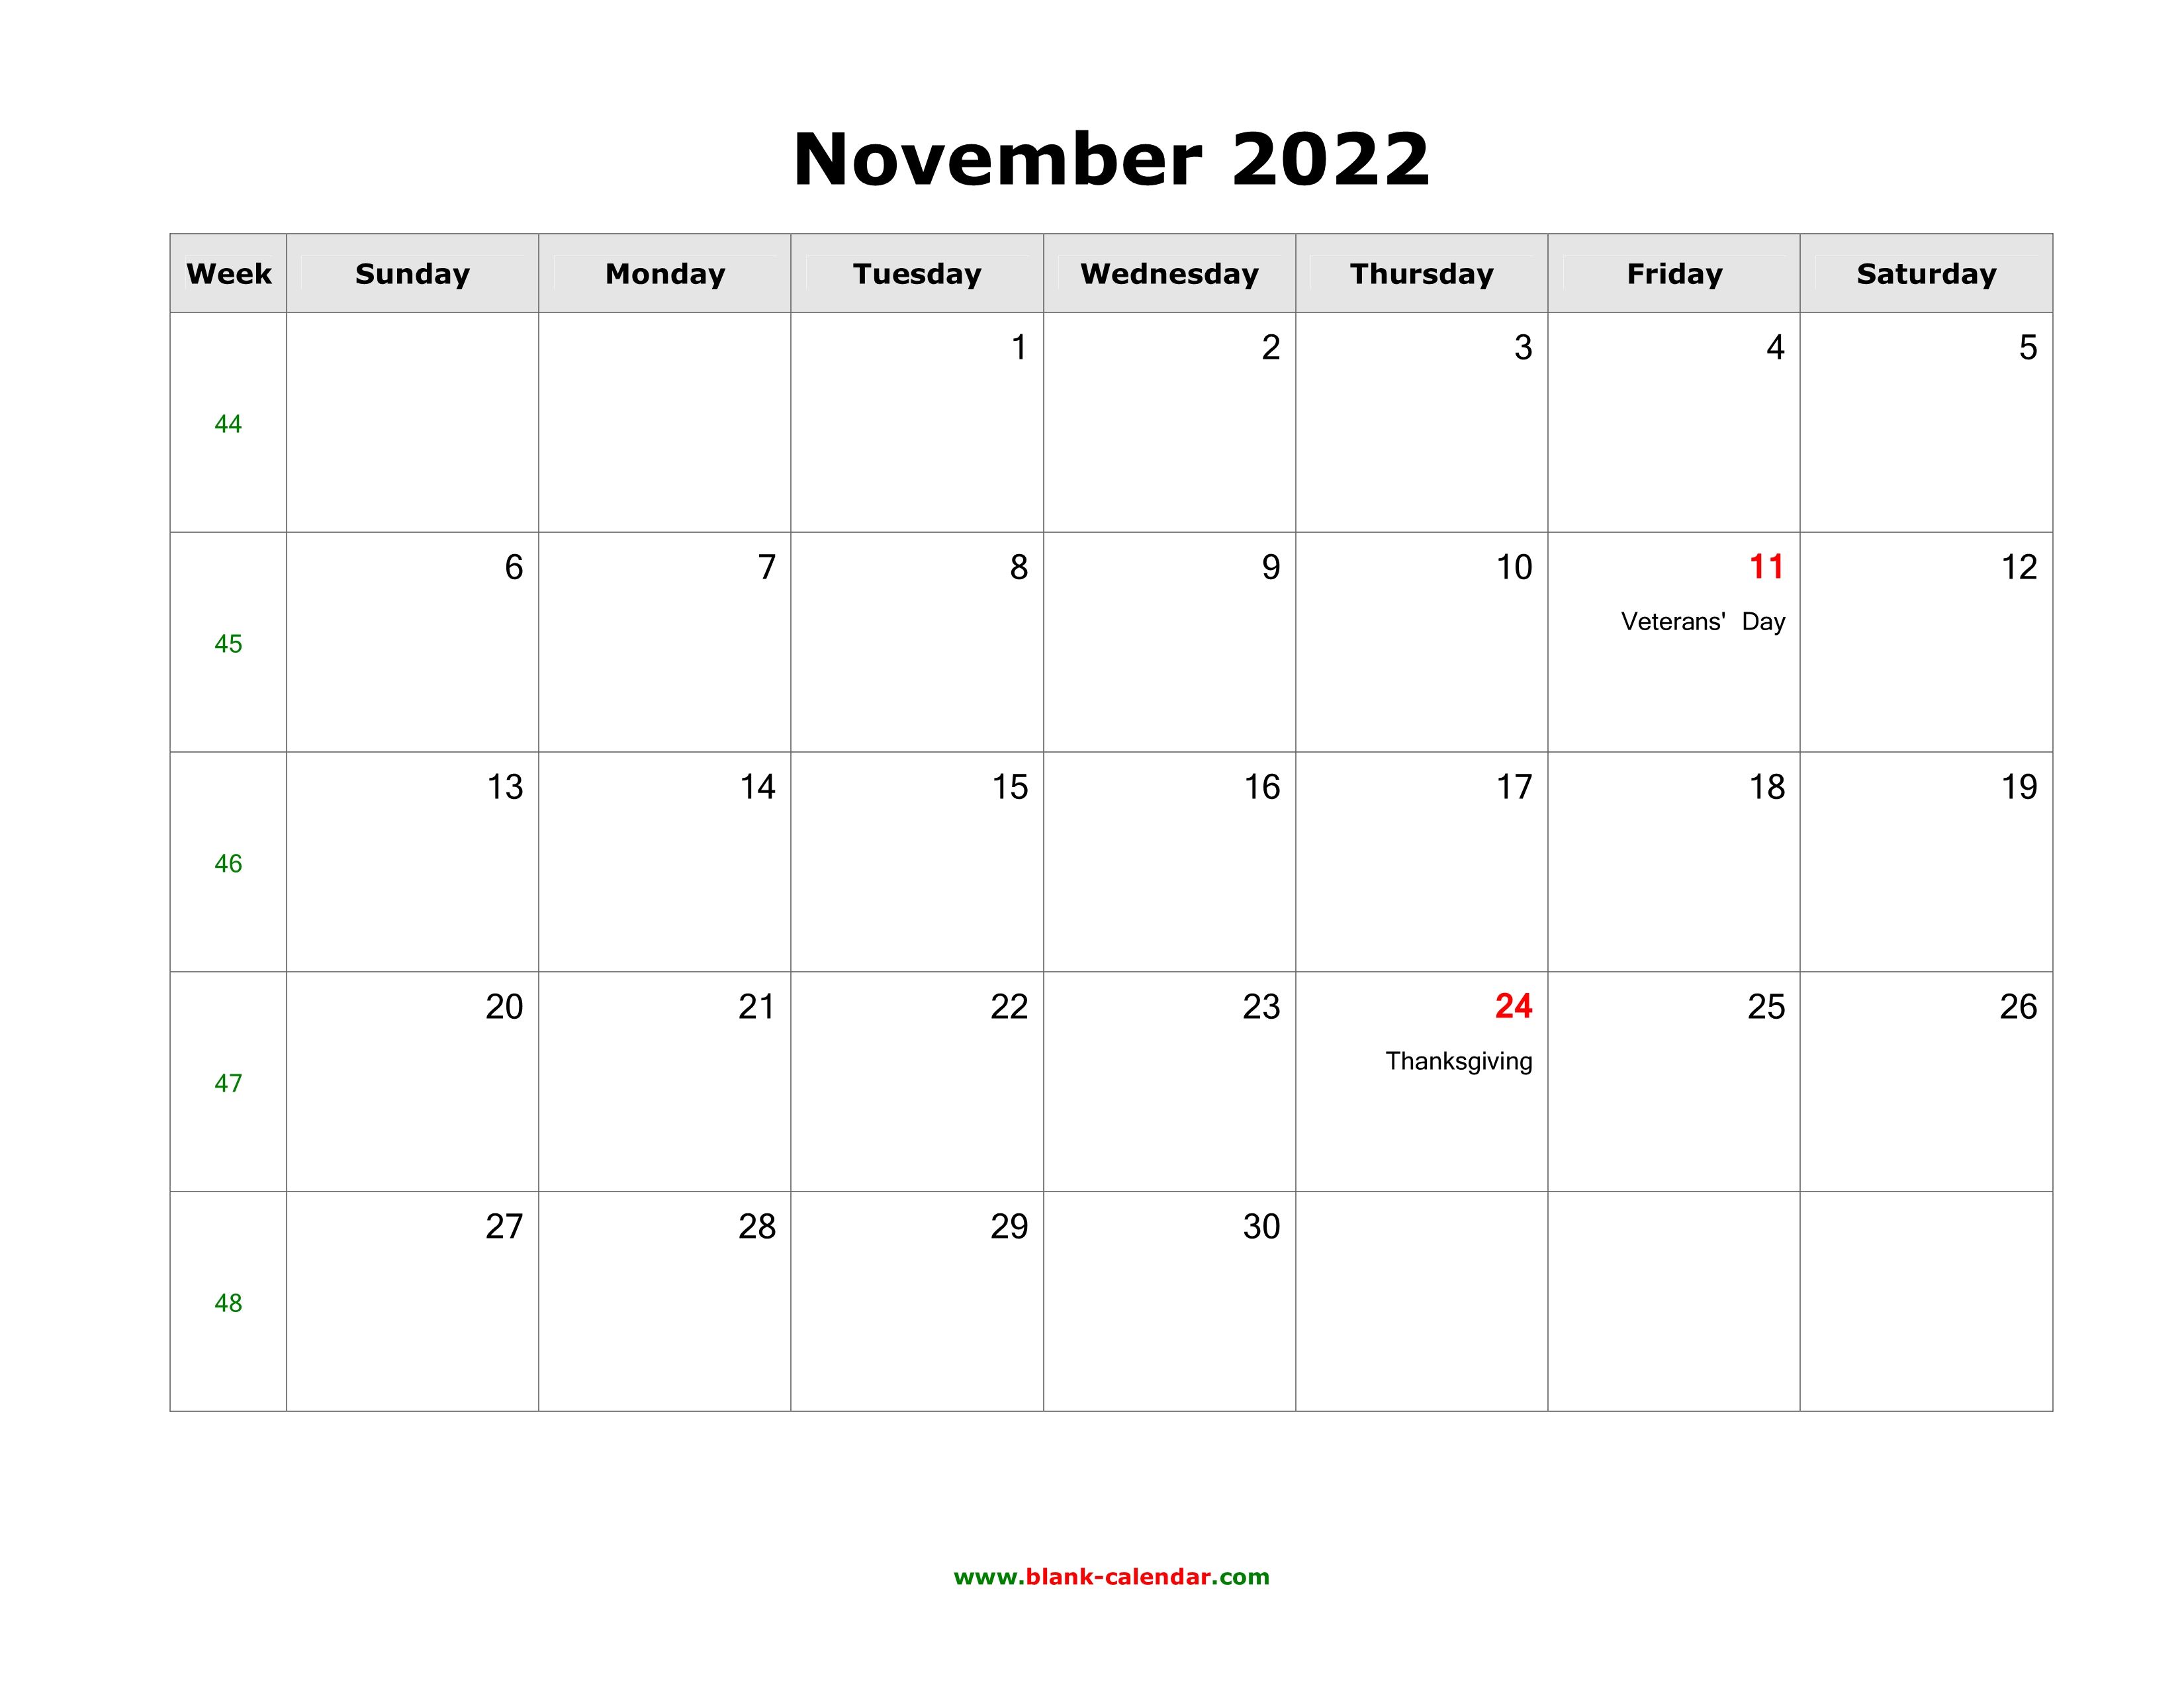 November 2022 Blank Calendar | Free Download Calendar Templates